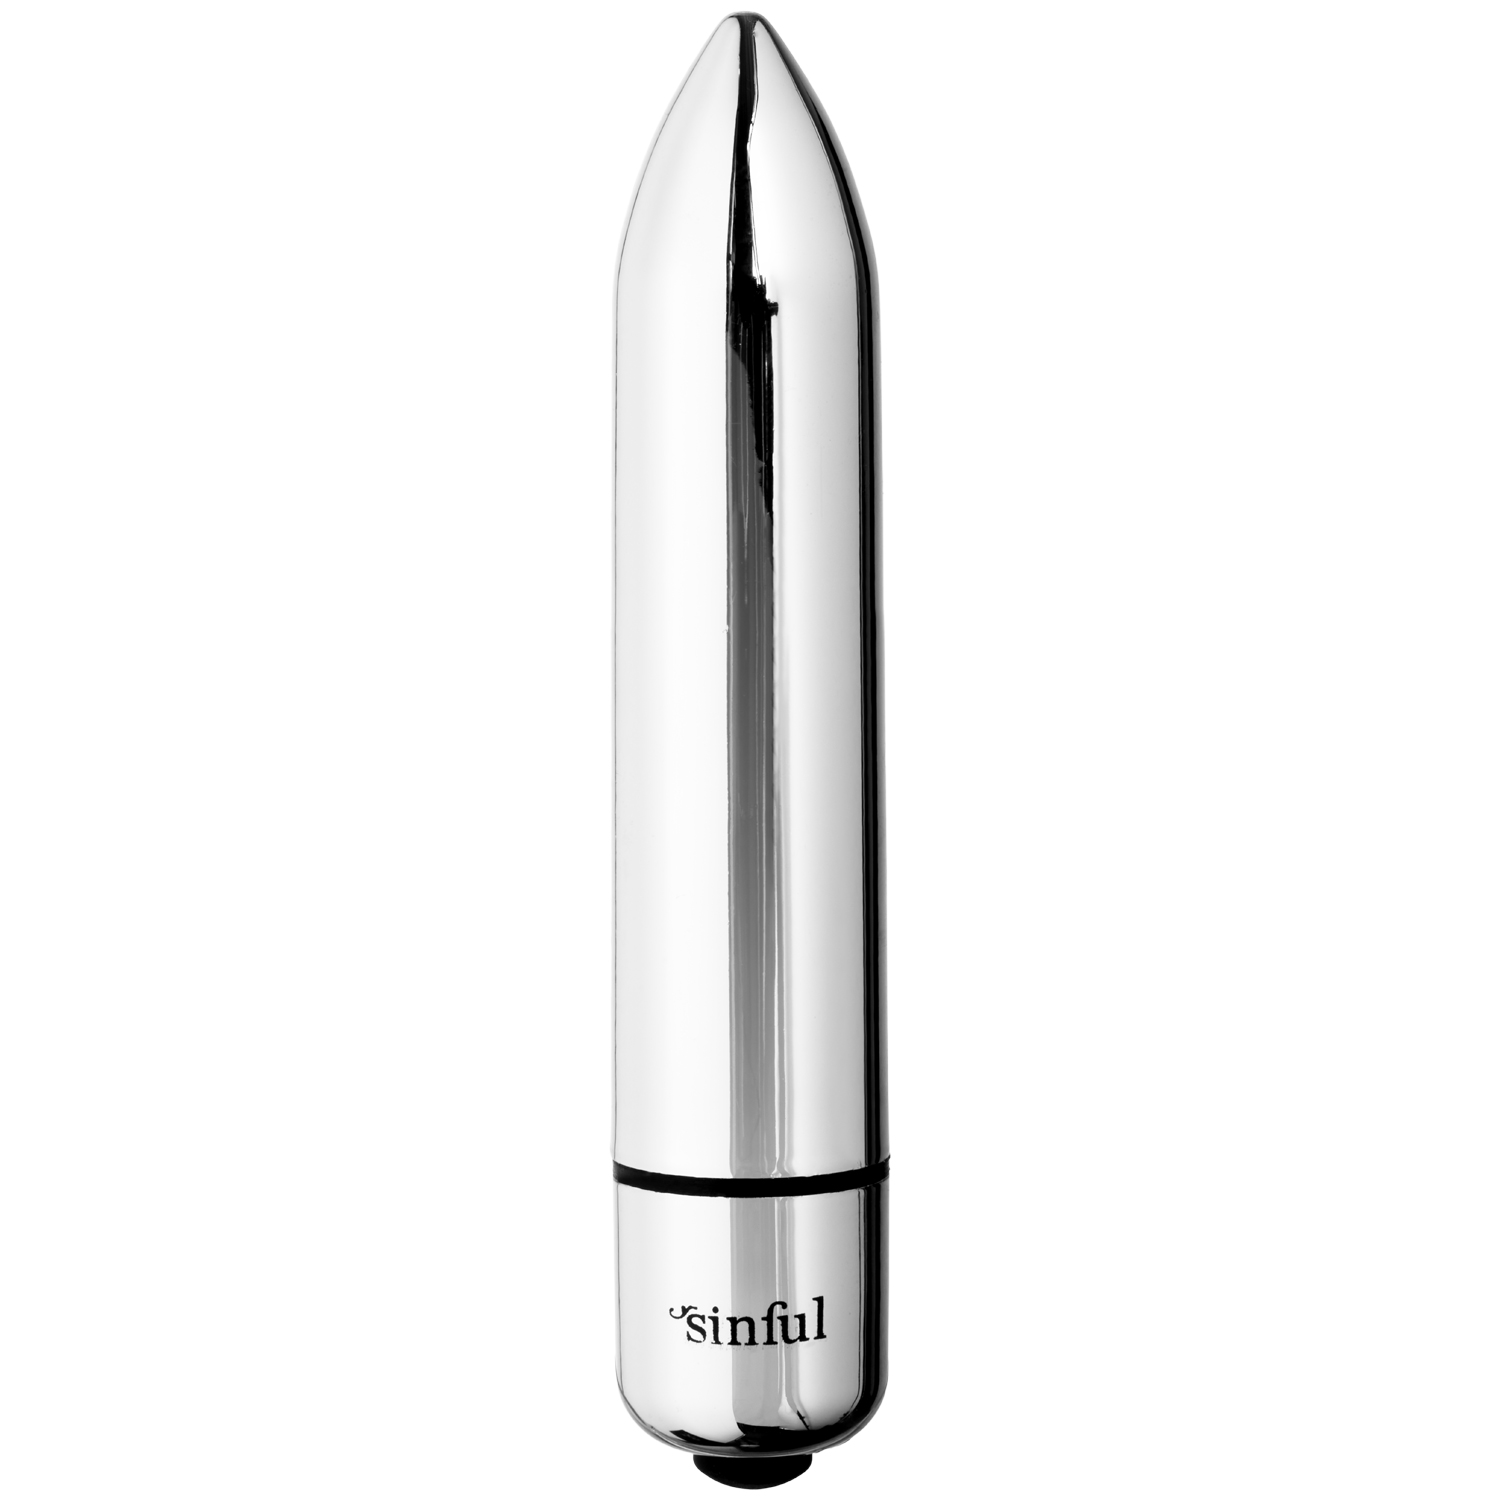 Sinful 10-Speed Magic Silver Bullet Vibrator